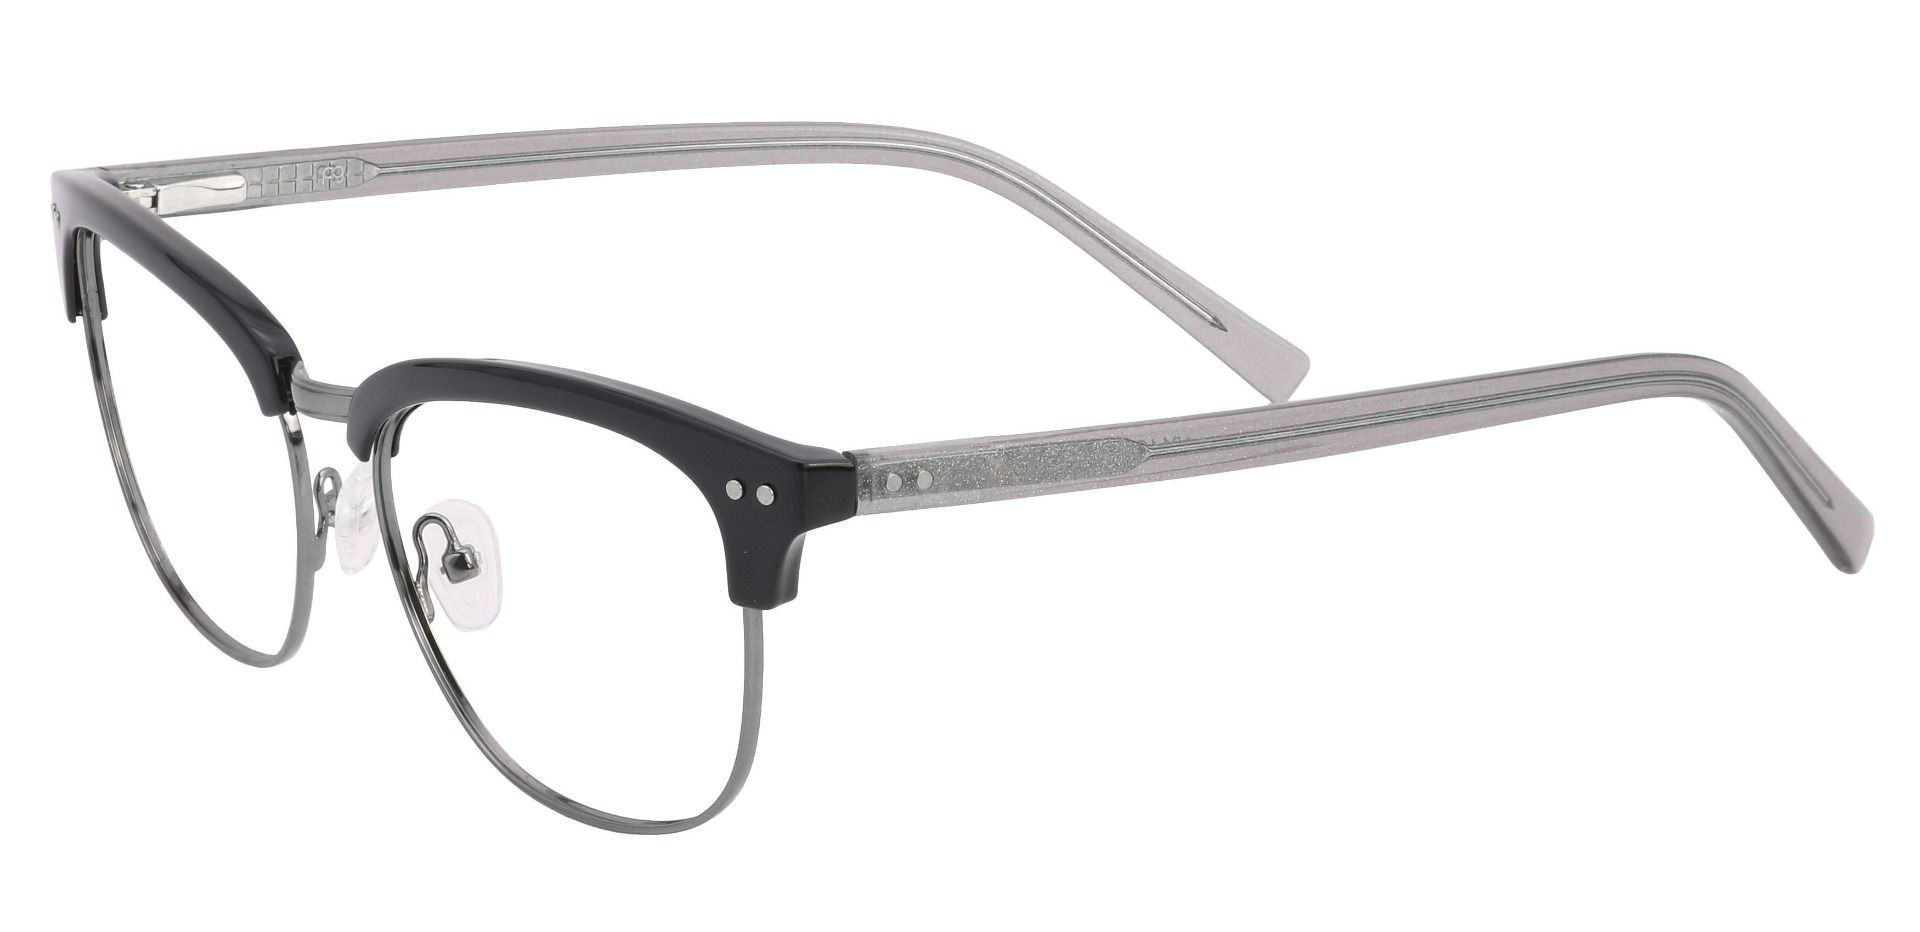 Monroe Browline Progressive Glasses - Gray